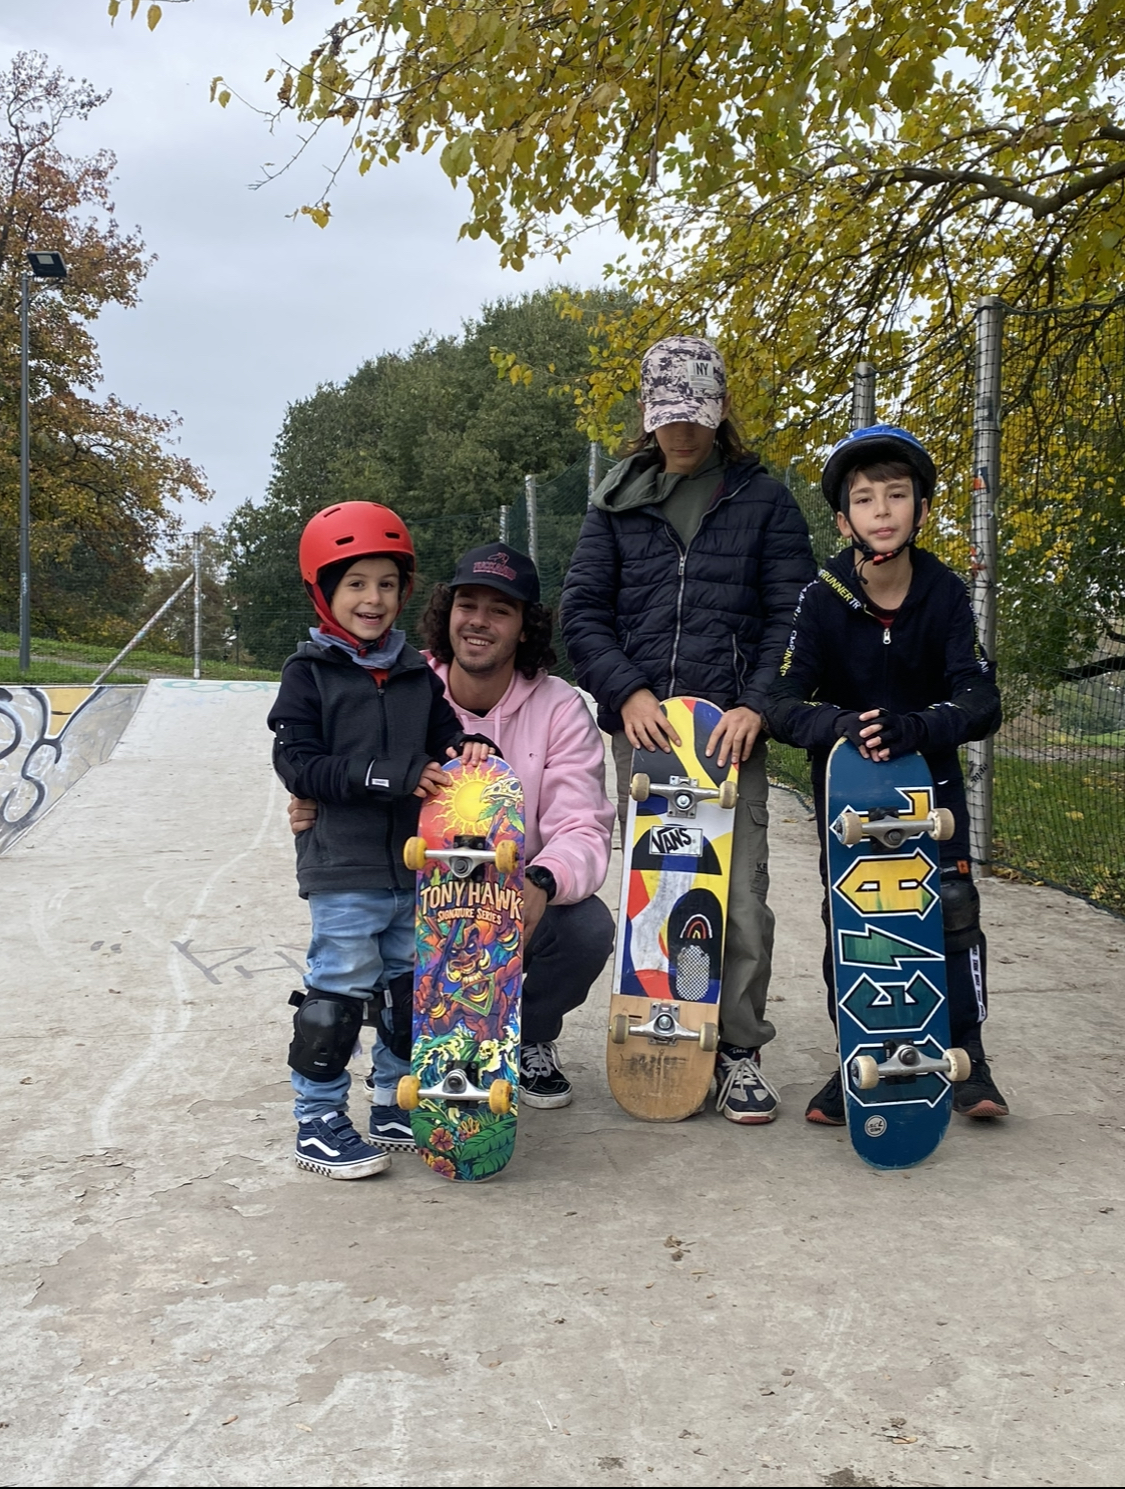 WheelBite Skateboard School Asd